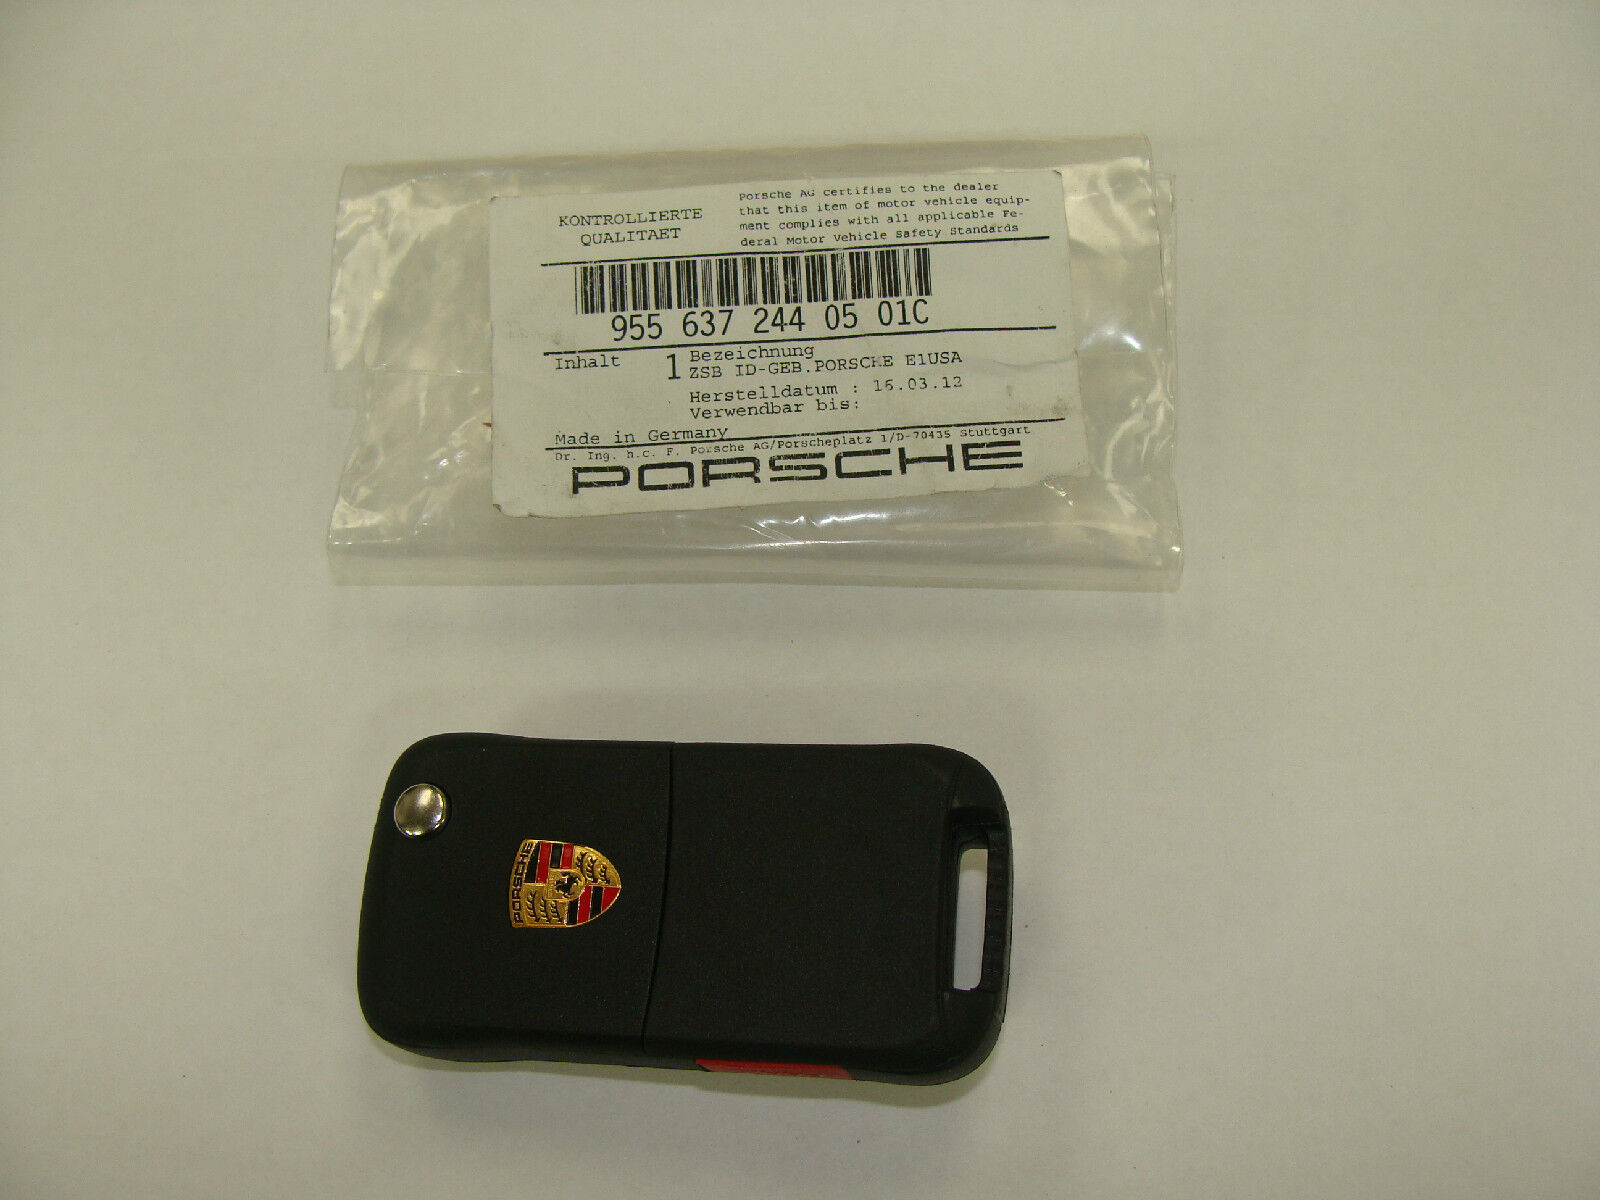 Porsche Cayenne 2003-2005 key remote